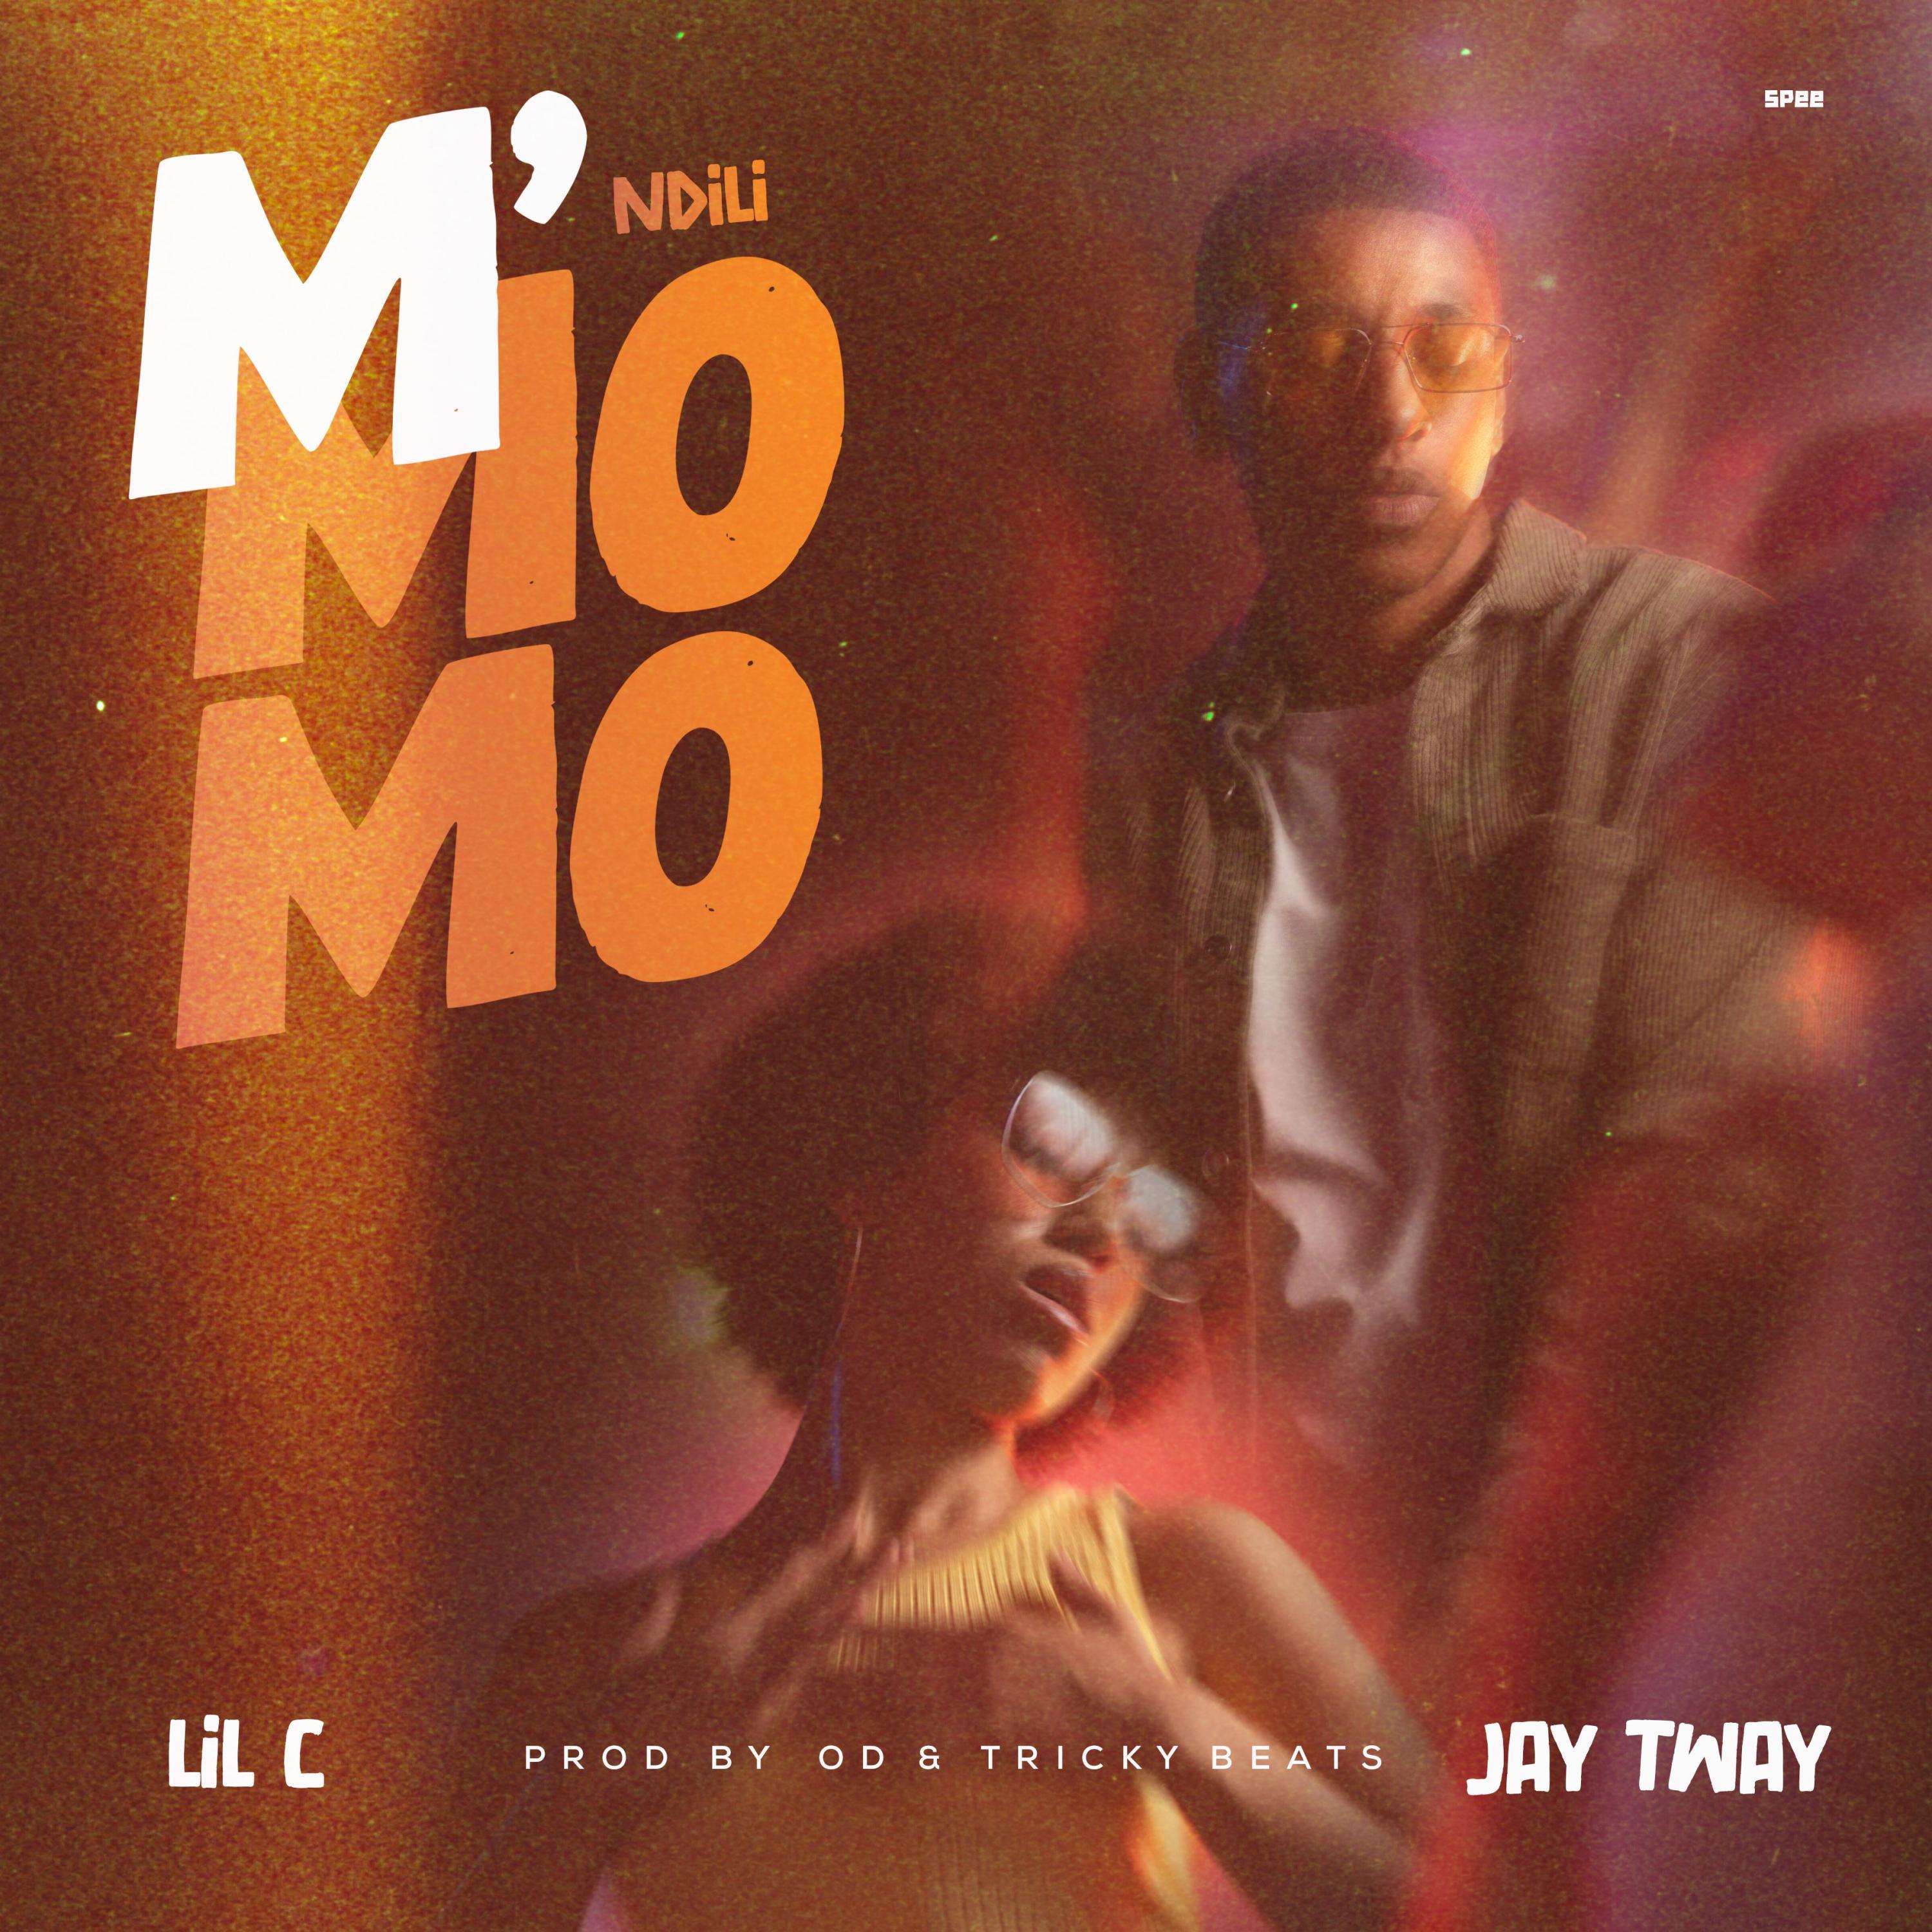 Lil C - Ndili M'momo (feat. Jay Tway)